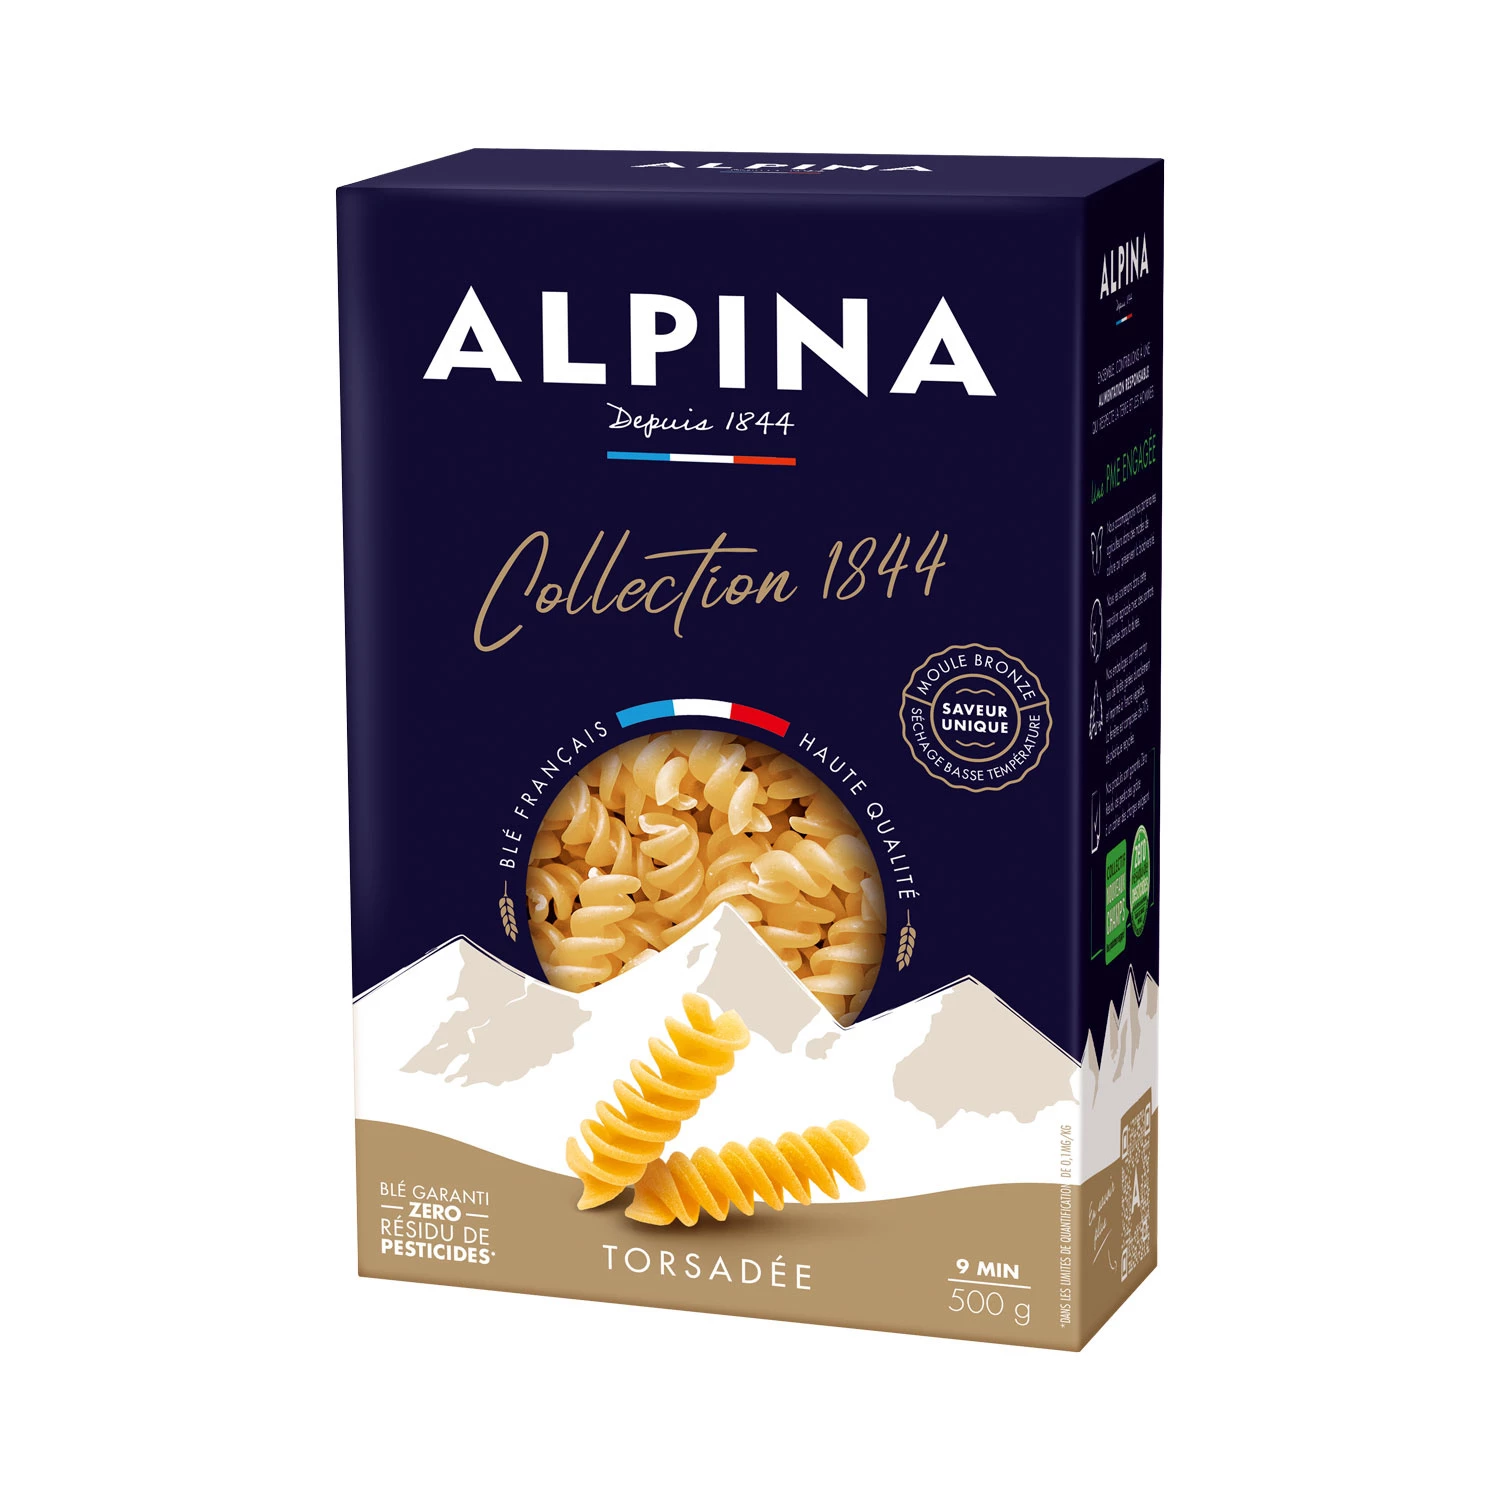 Bánh xoắn La Collection, 500g - ALPINA